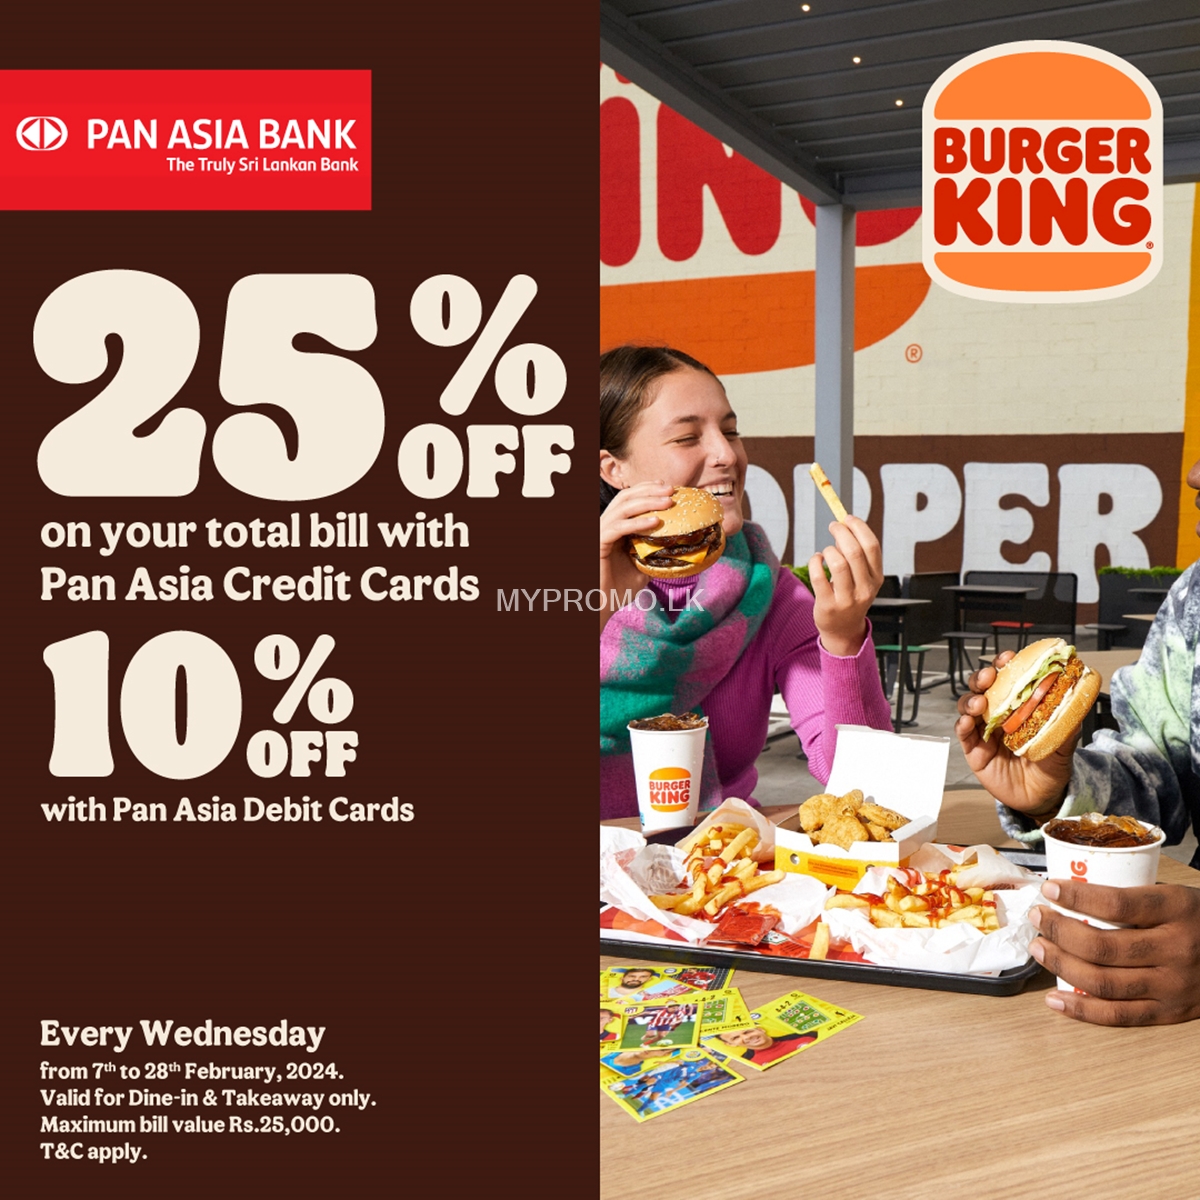 Enjoy up to 25% off for Pan Asia Bank Credit Cards at Burger King